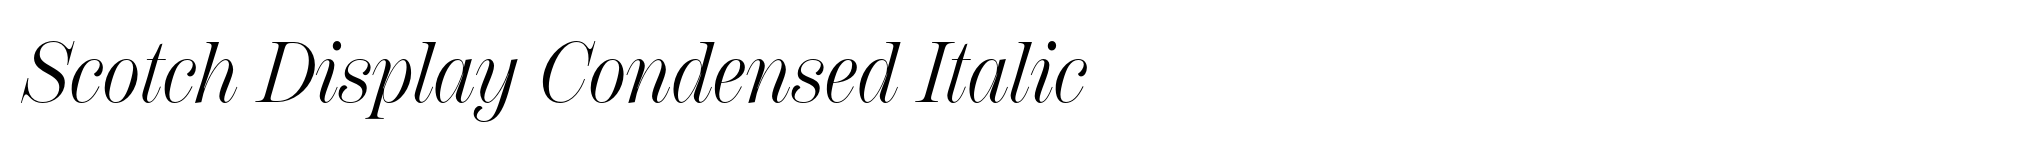 Scotch Display Condensed Italic image